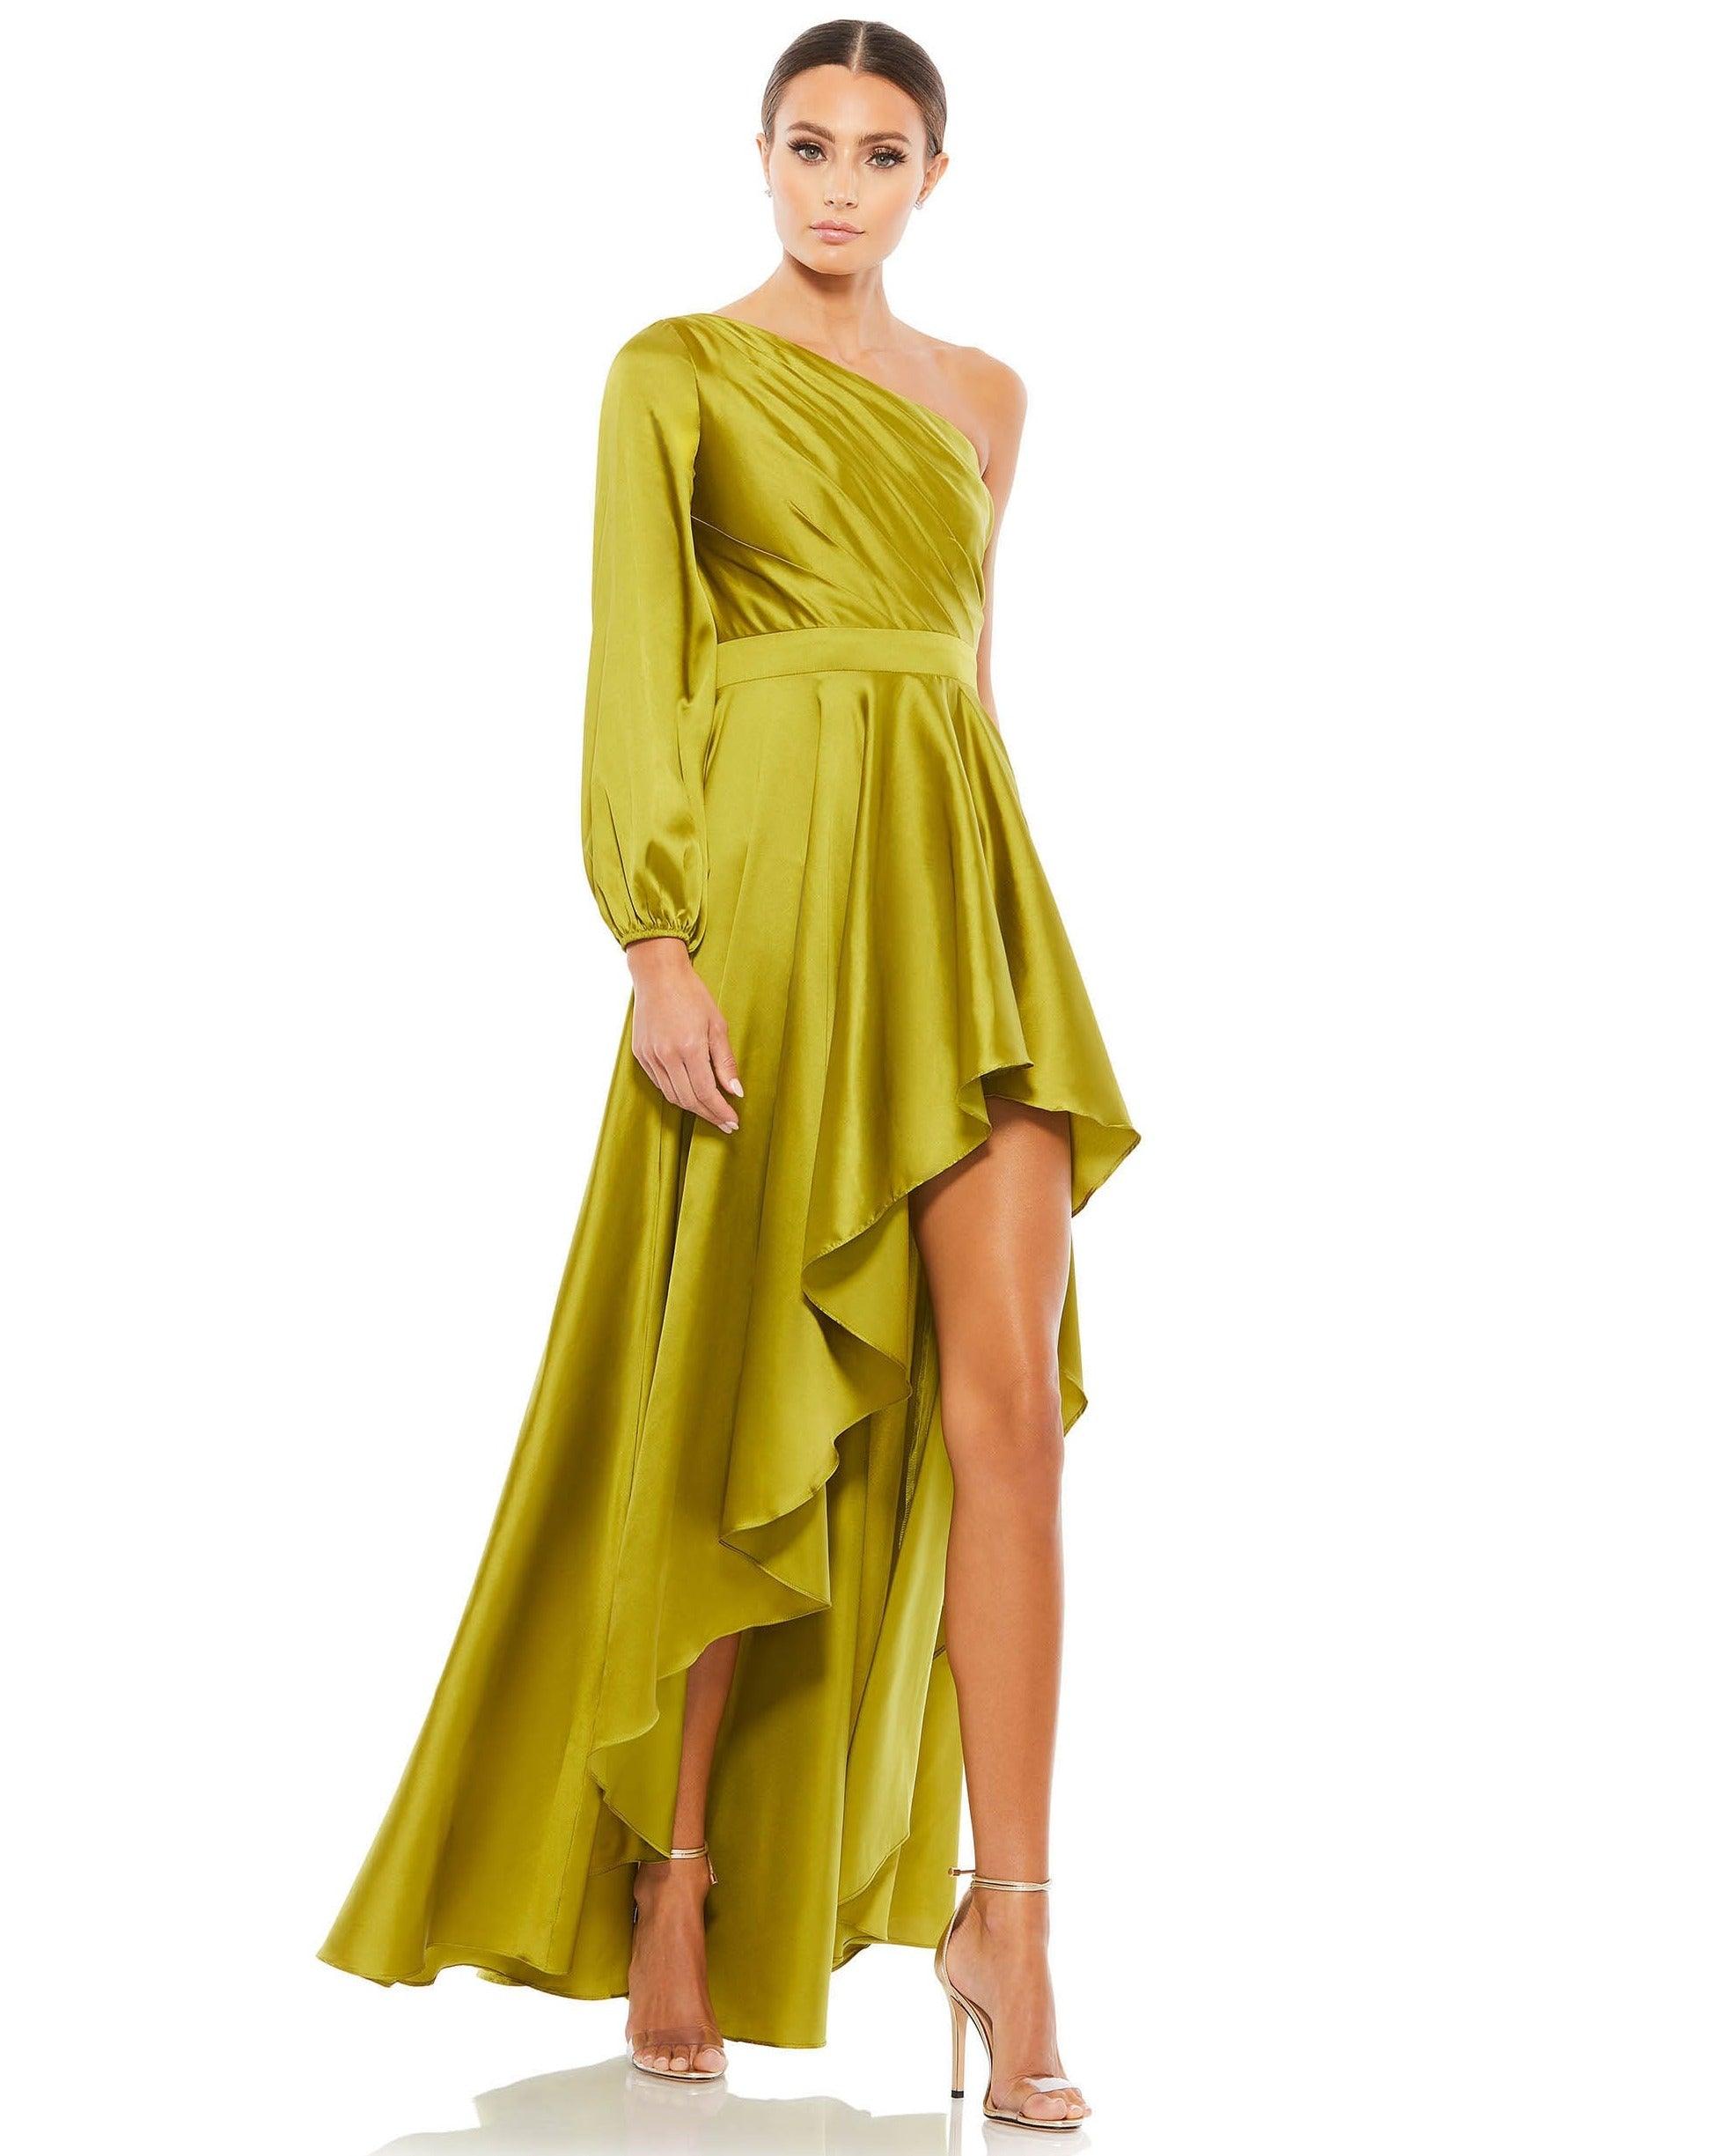 Black Mac Duggal 49141 High Low One Shoulder Dress for $179.0